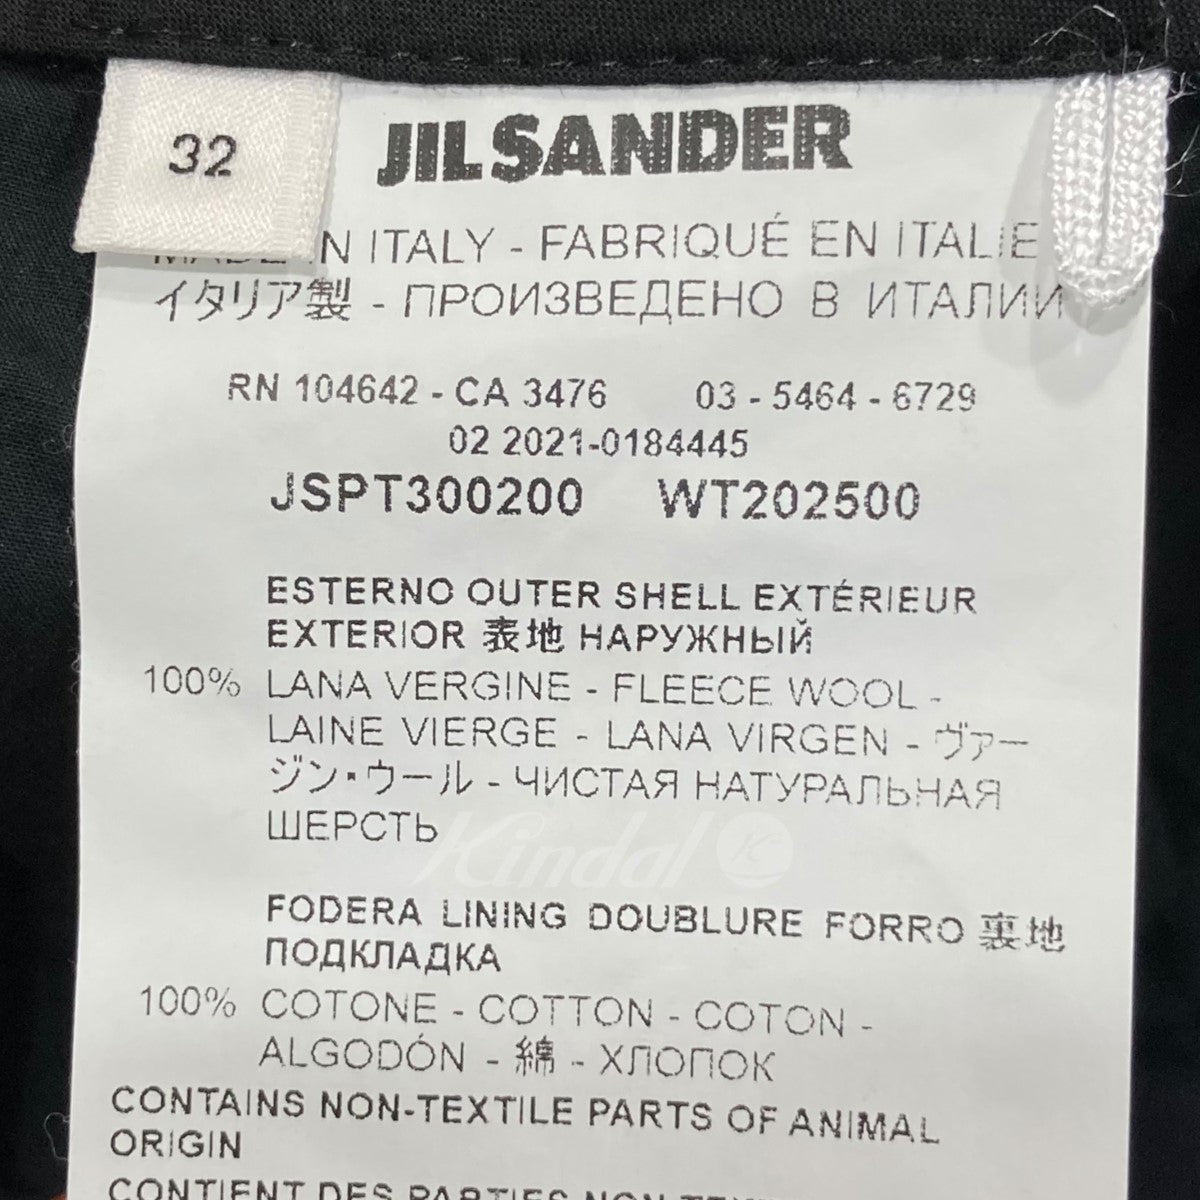 JIL SANDER(ジルサンダー) ウールスラックスパンツ JSPT300200 ...